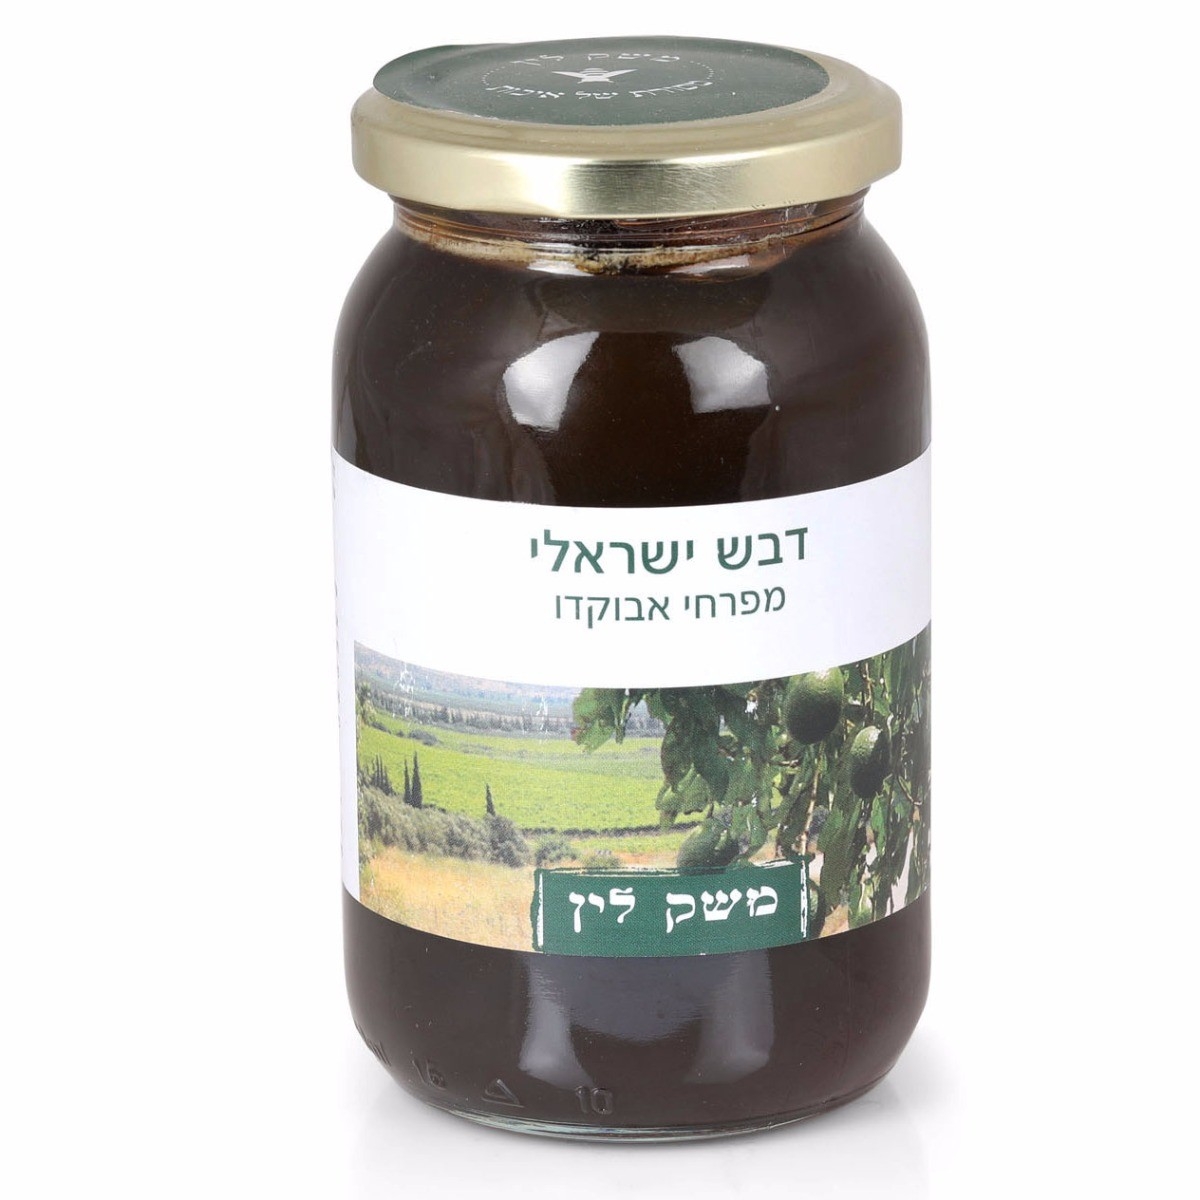 Lin’s Farm Natural Israeli Honey from Avocado Flowers - 1